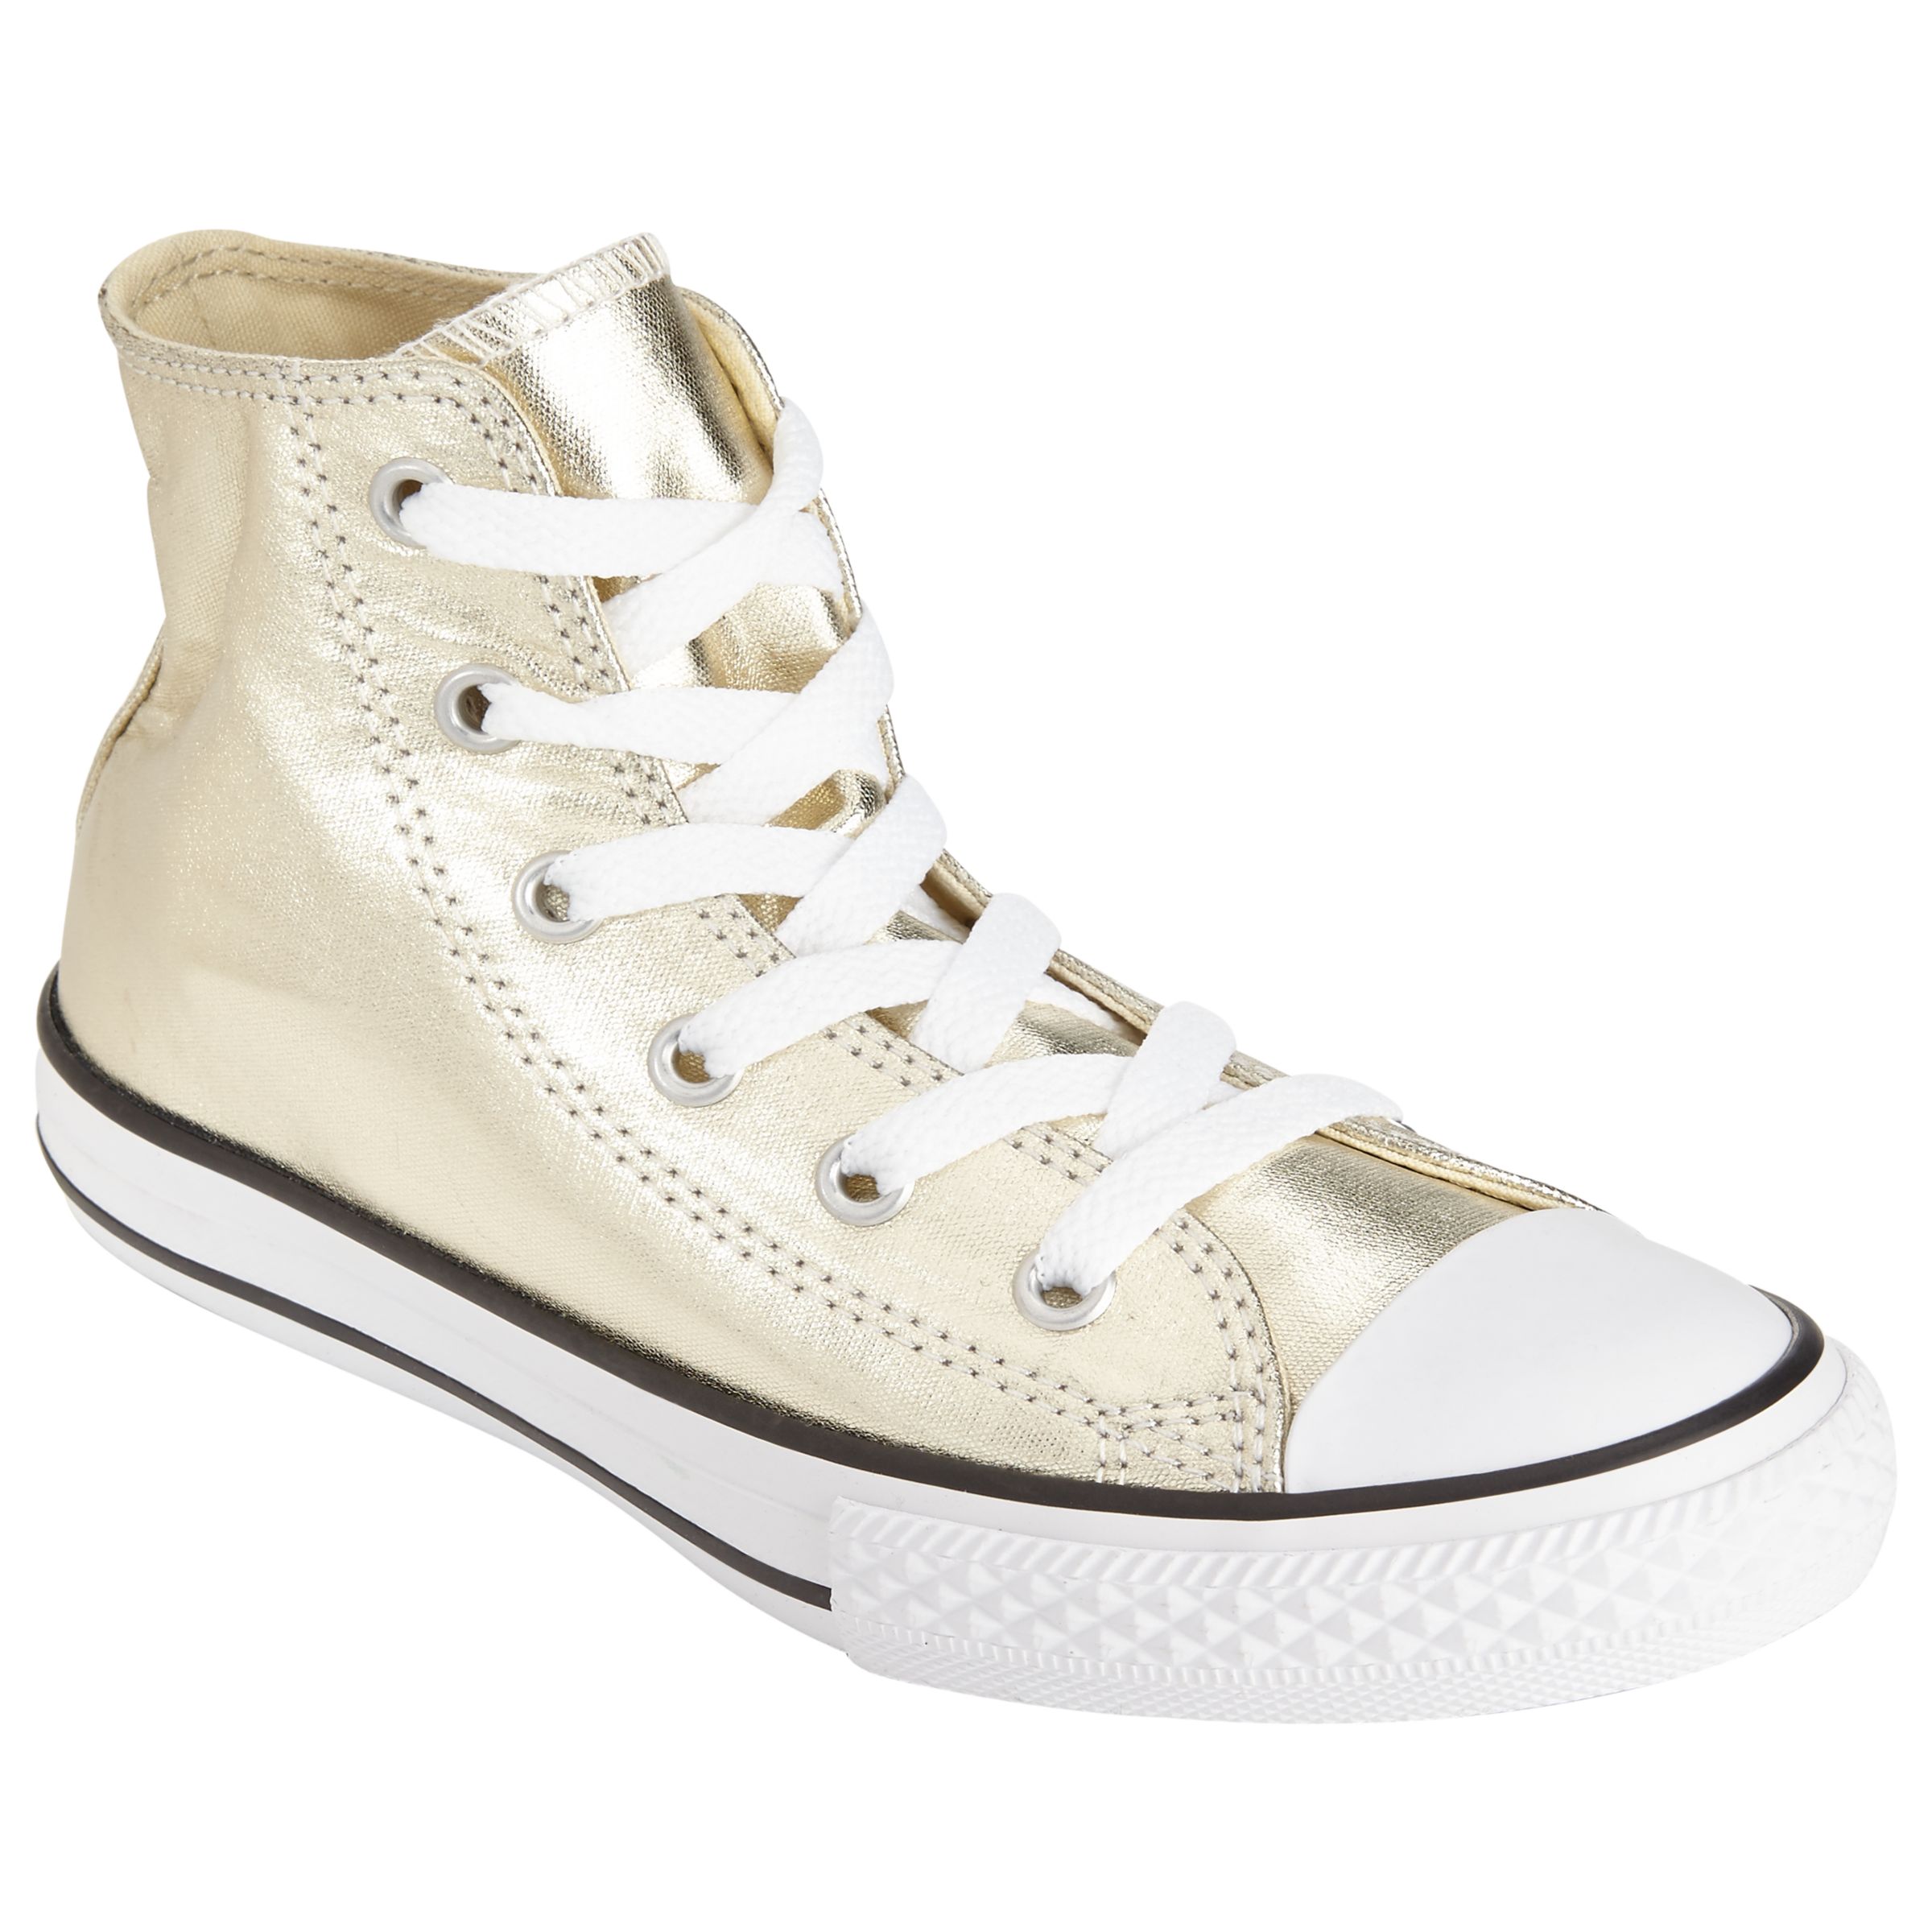 Converse Children's Hi Top Chuck Taylor Metallic Shoes, Light Gold, 13 Jnr